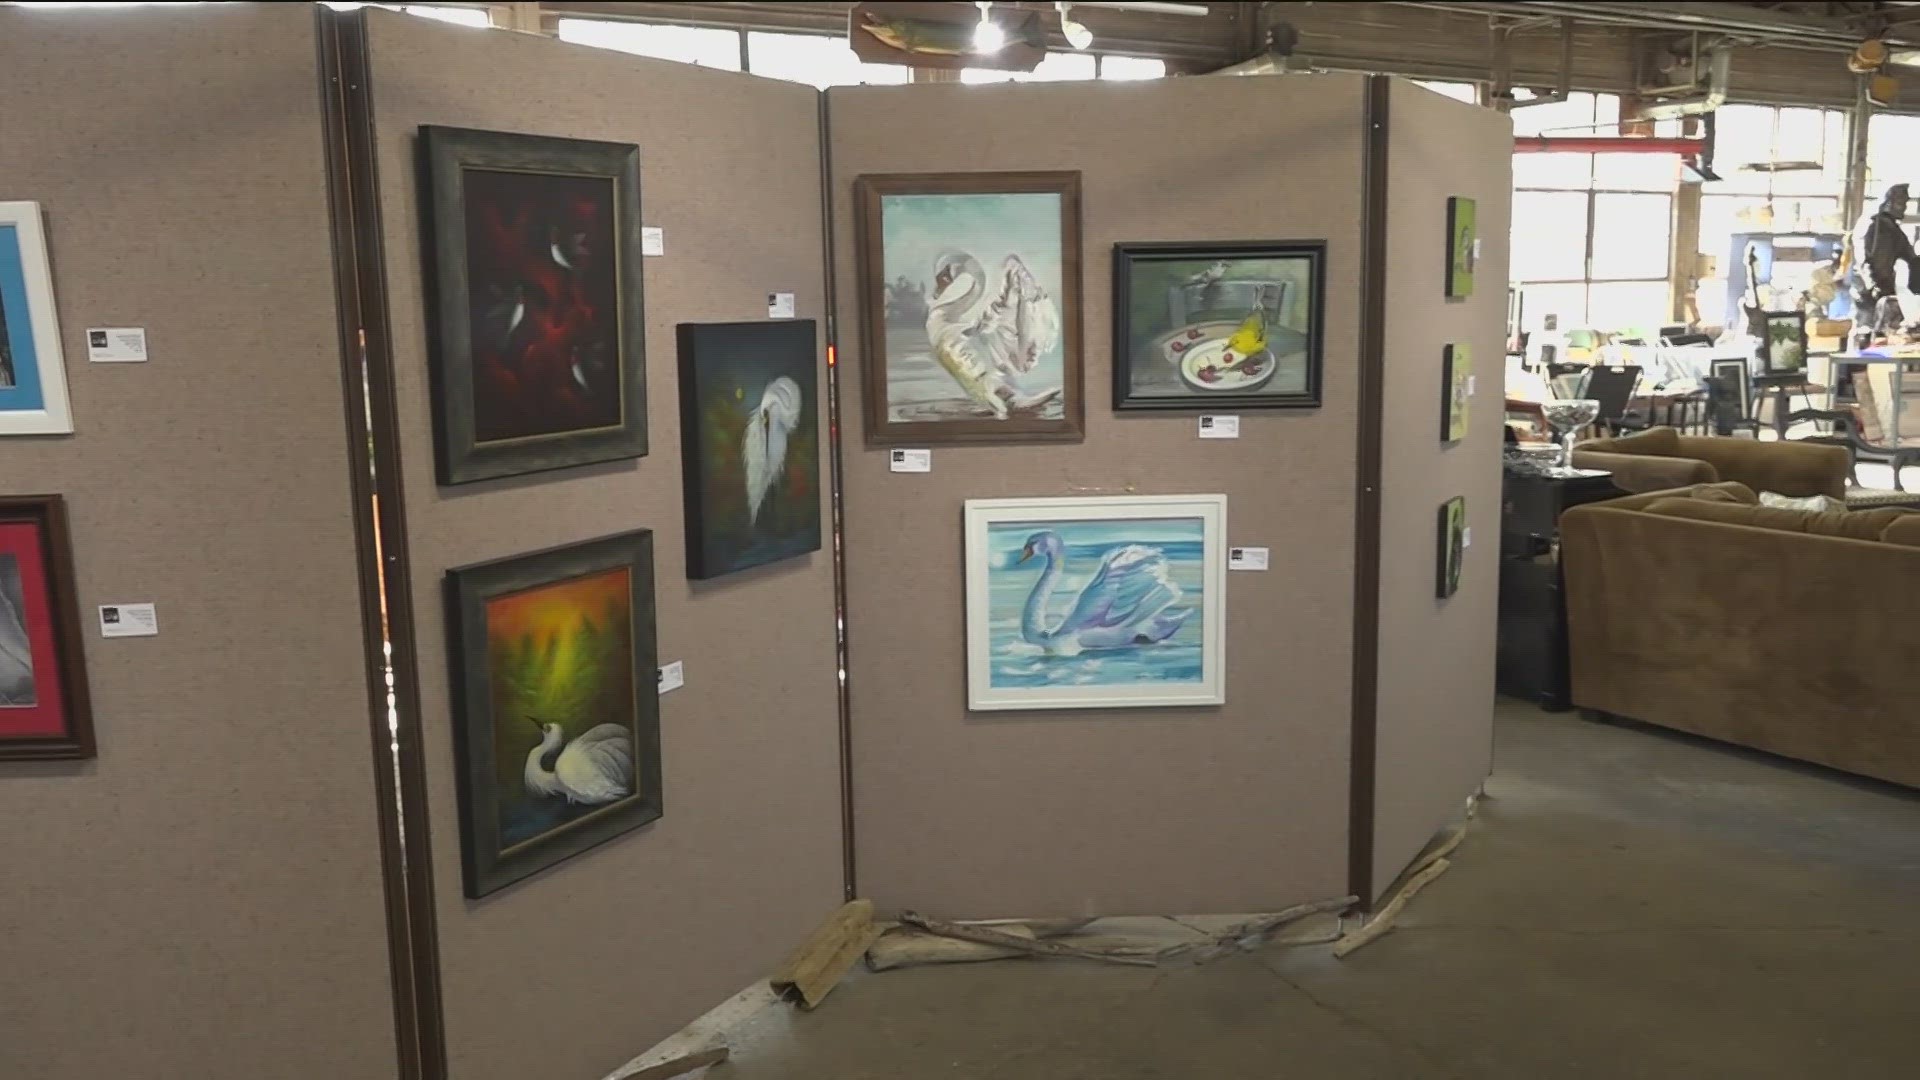 The Port Clinton exhibit celebrates both birds and artists.